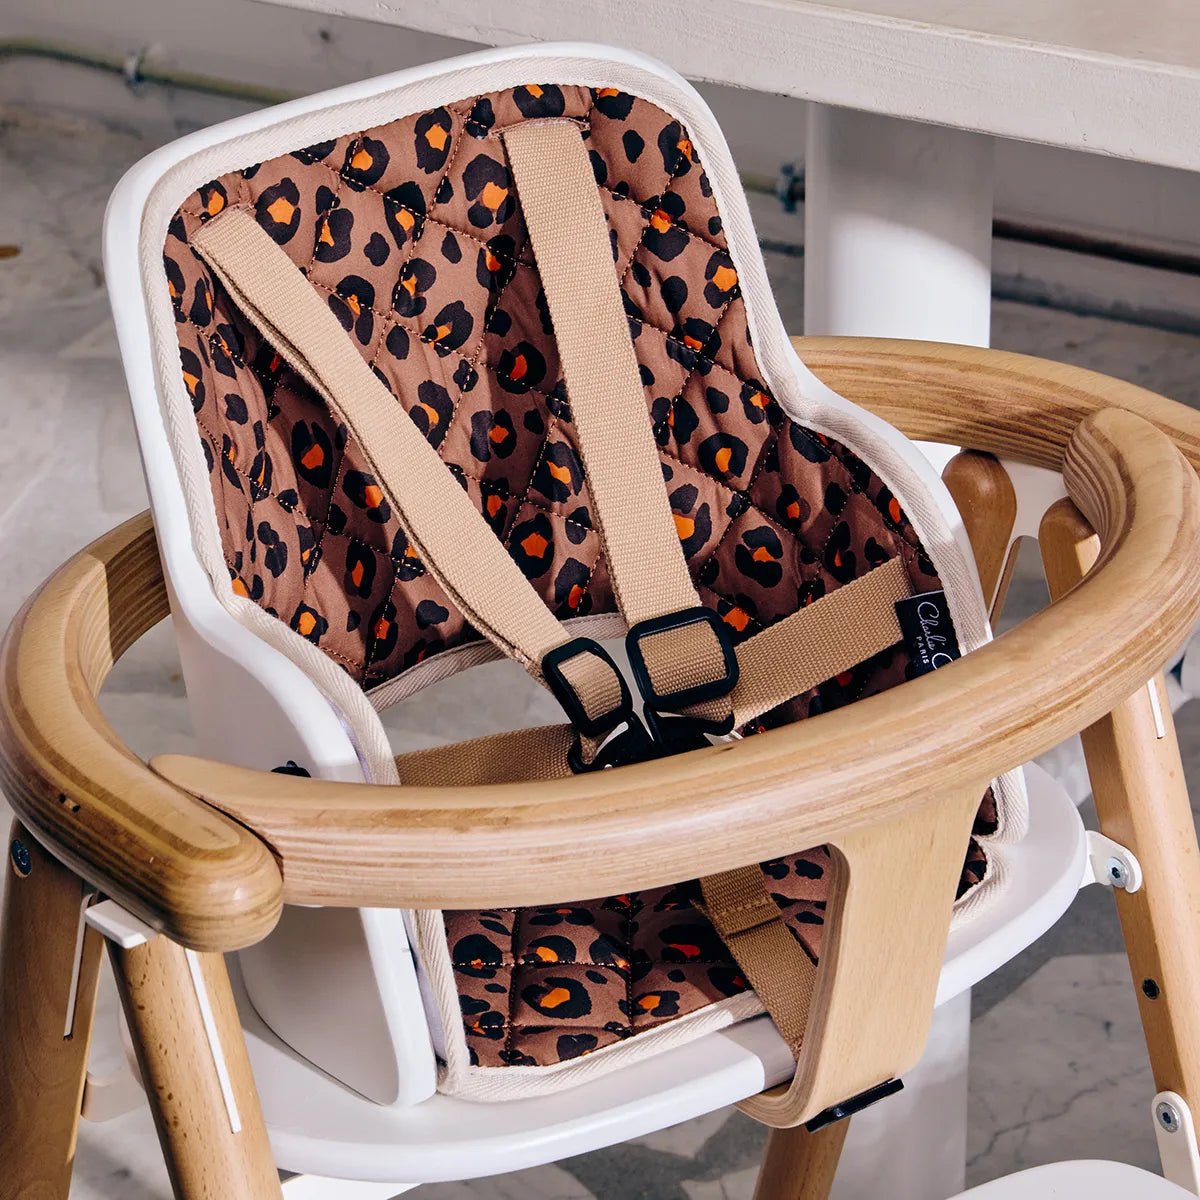 Charlie Crane TOBO Chair Cushions, en del av kategorien Furniture - At Home Interiør